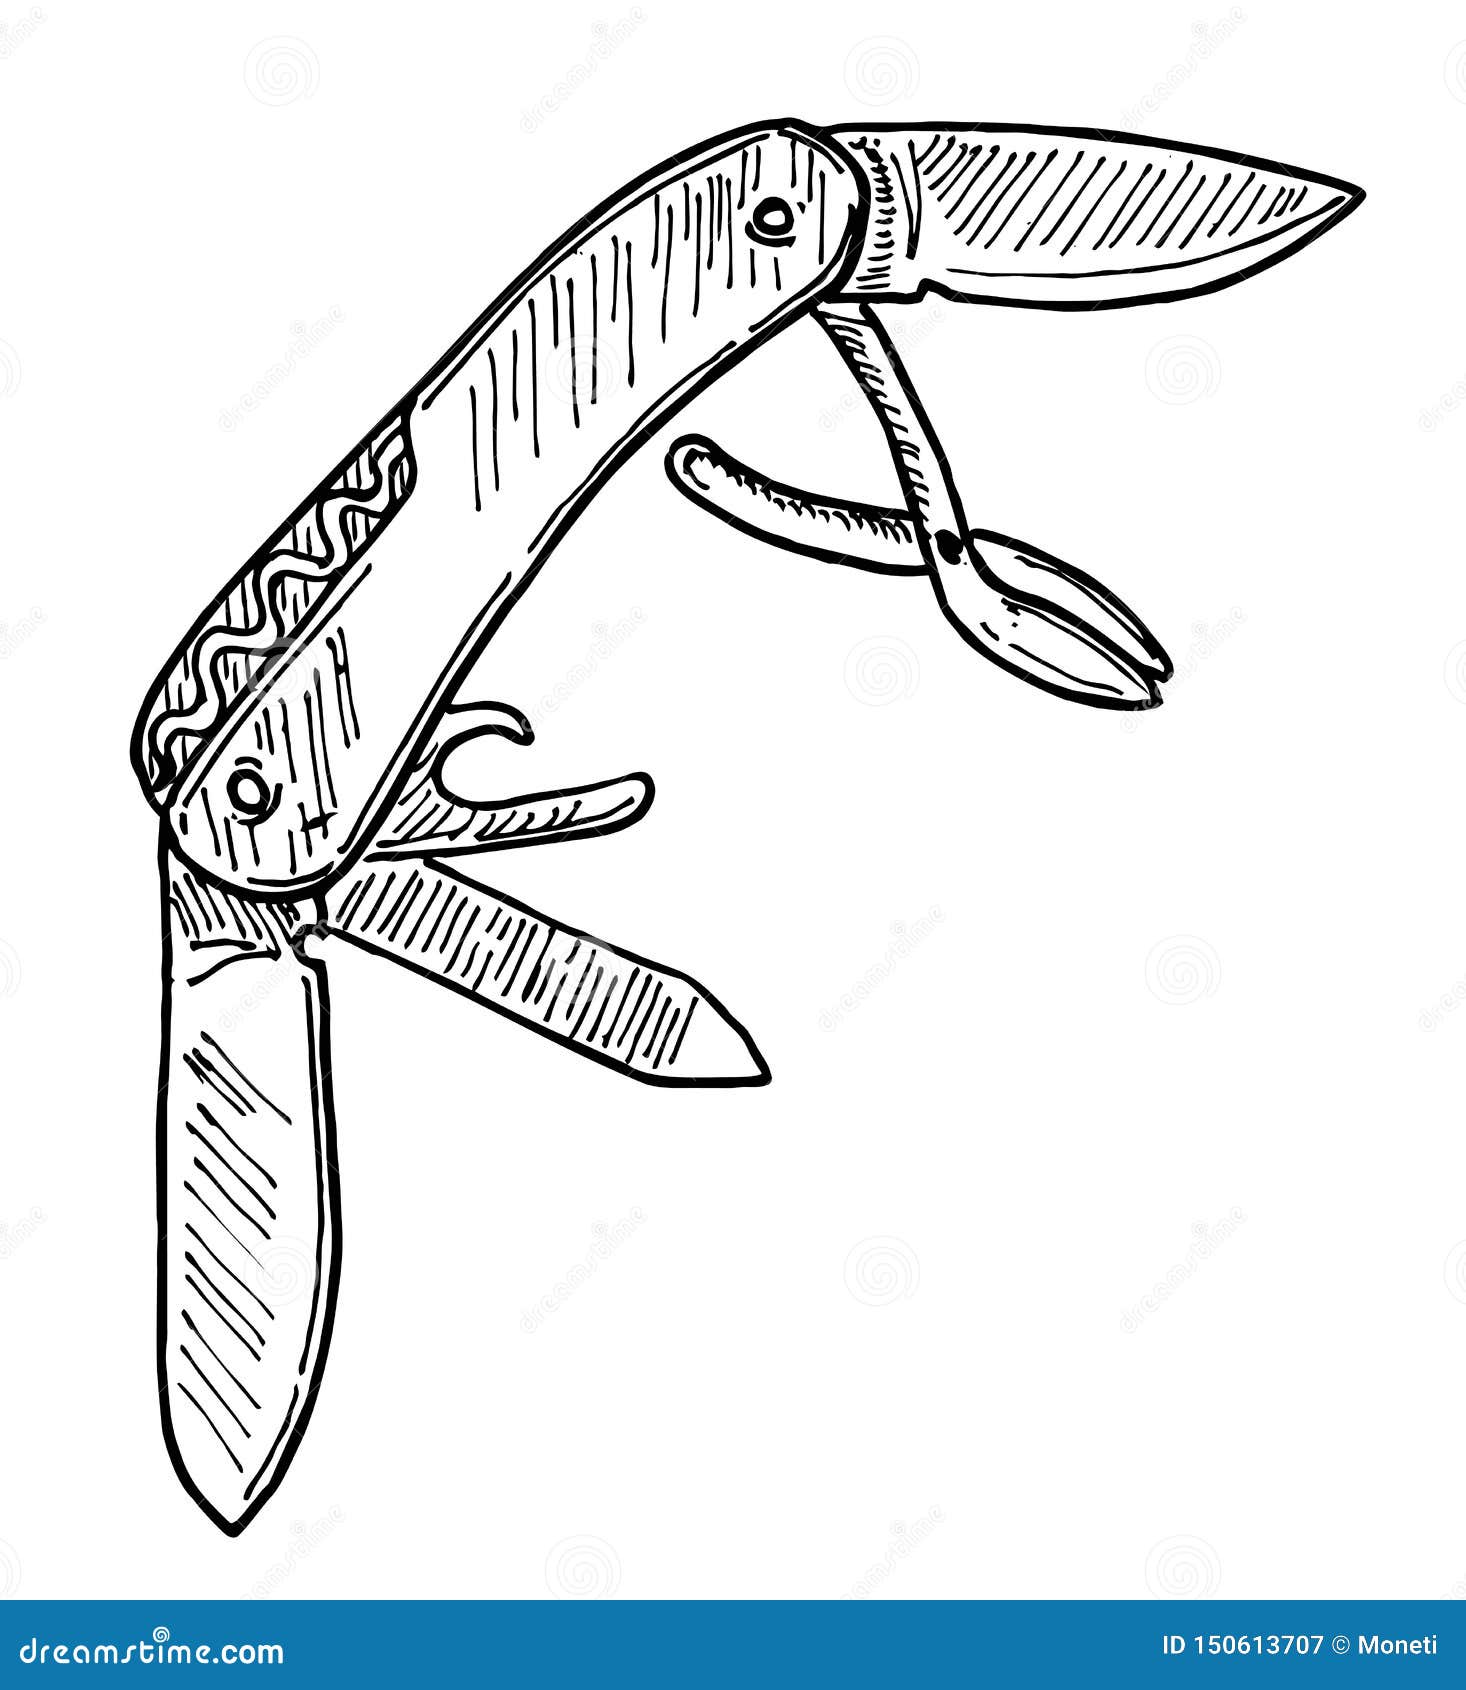 5800 Pocket Knife Illustrations RoyaltyFree Vector Graphics  Clip Art   iStock  Swiss army knife concept Toolbox Tools